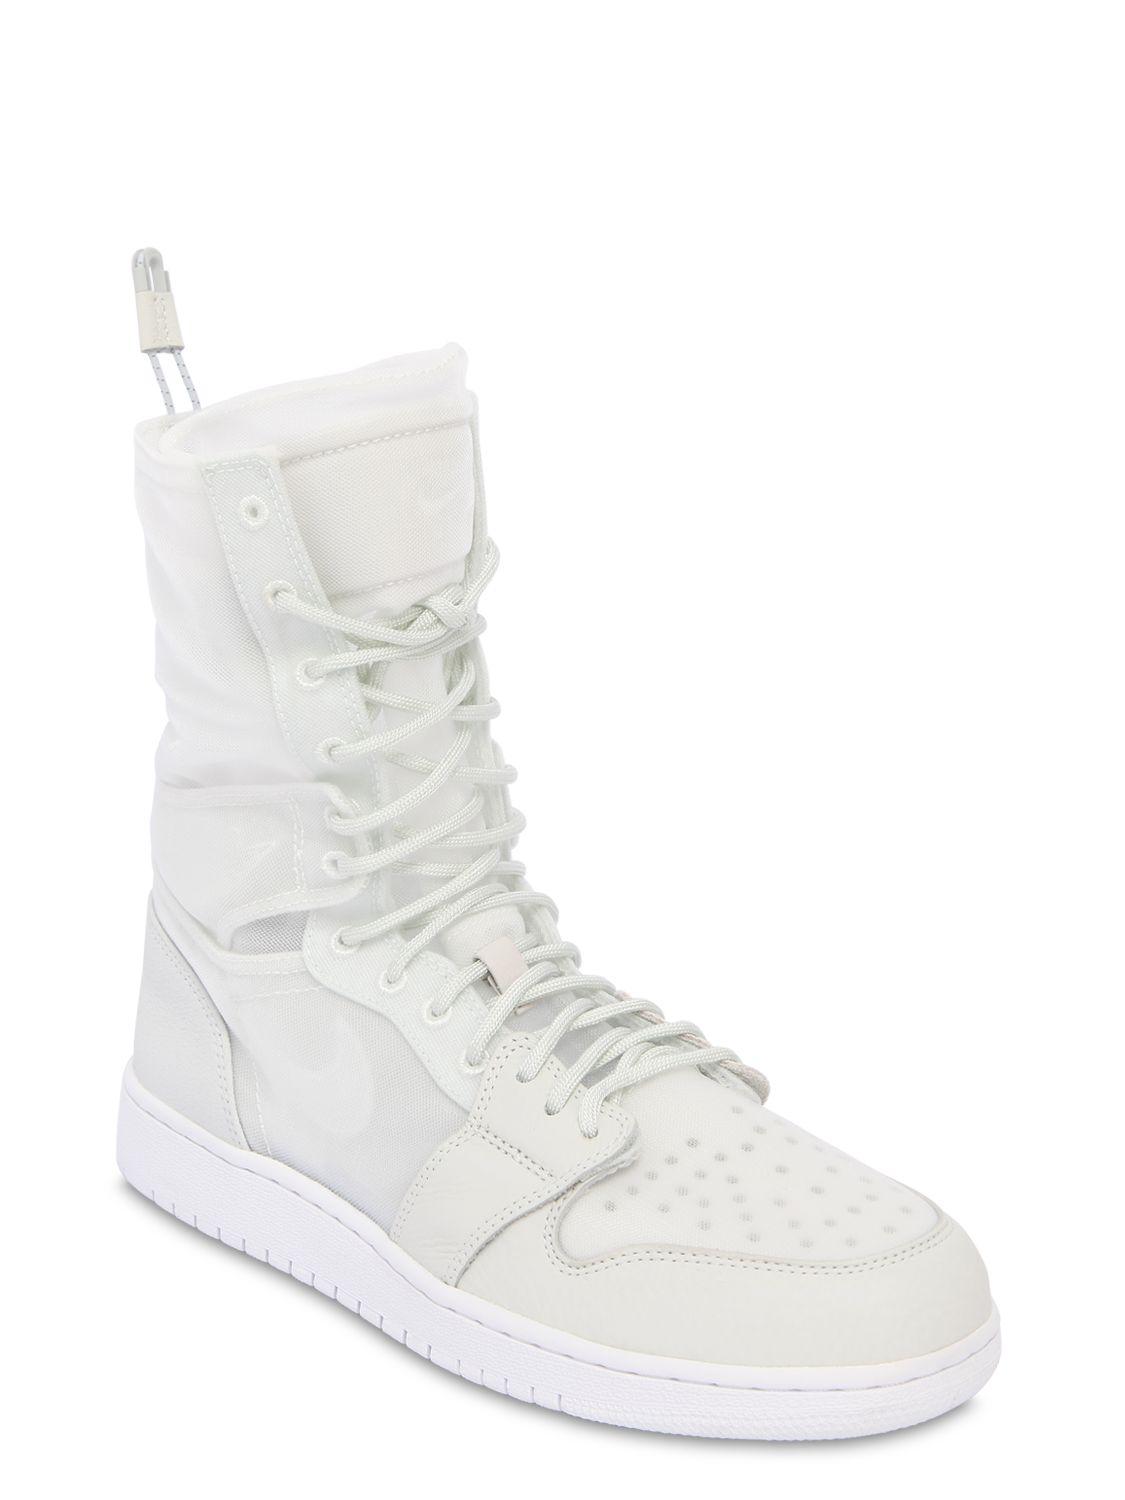 Nike Women's White Air Jordan 1 Explorer Xx Sneaker Boots